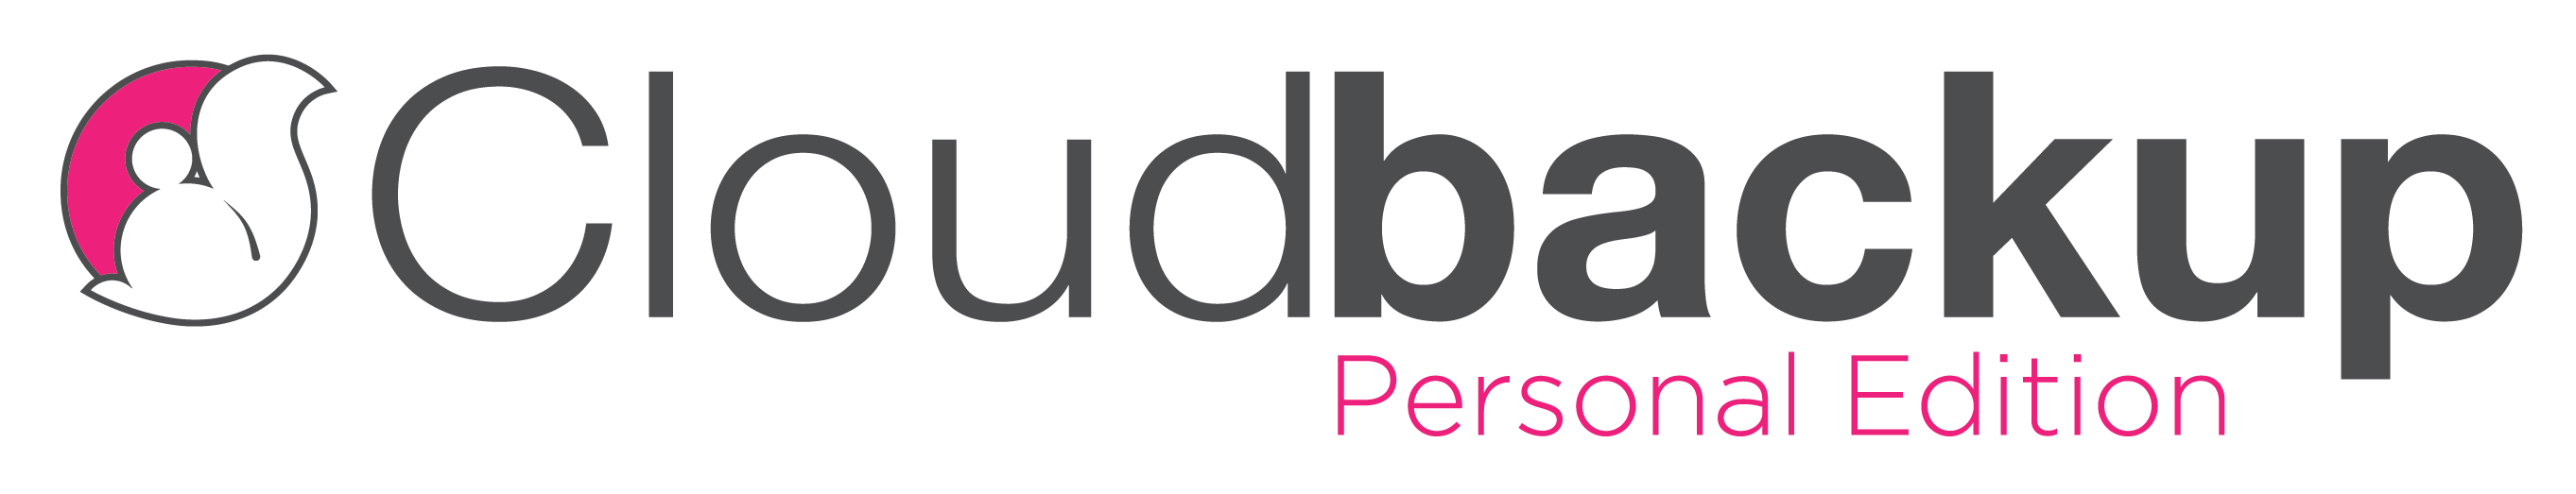 Cloudbackup Personal Edition Logo-01